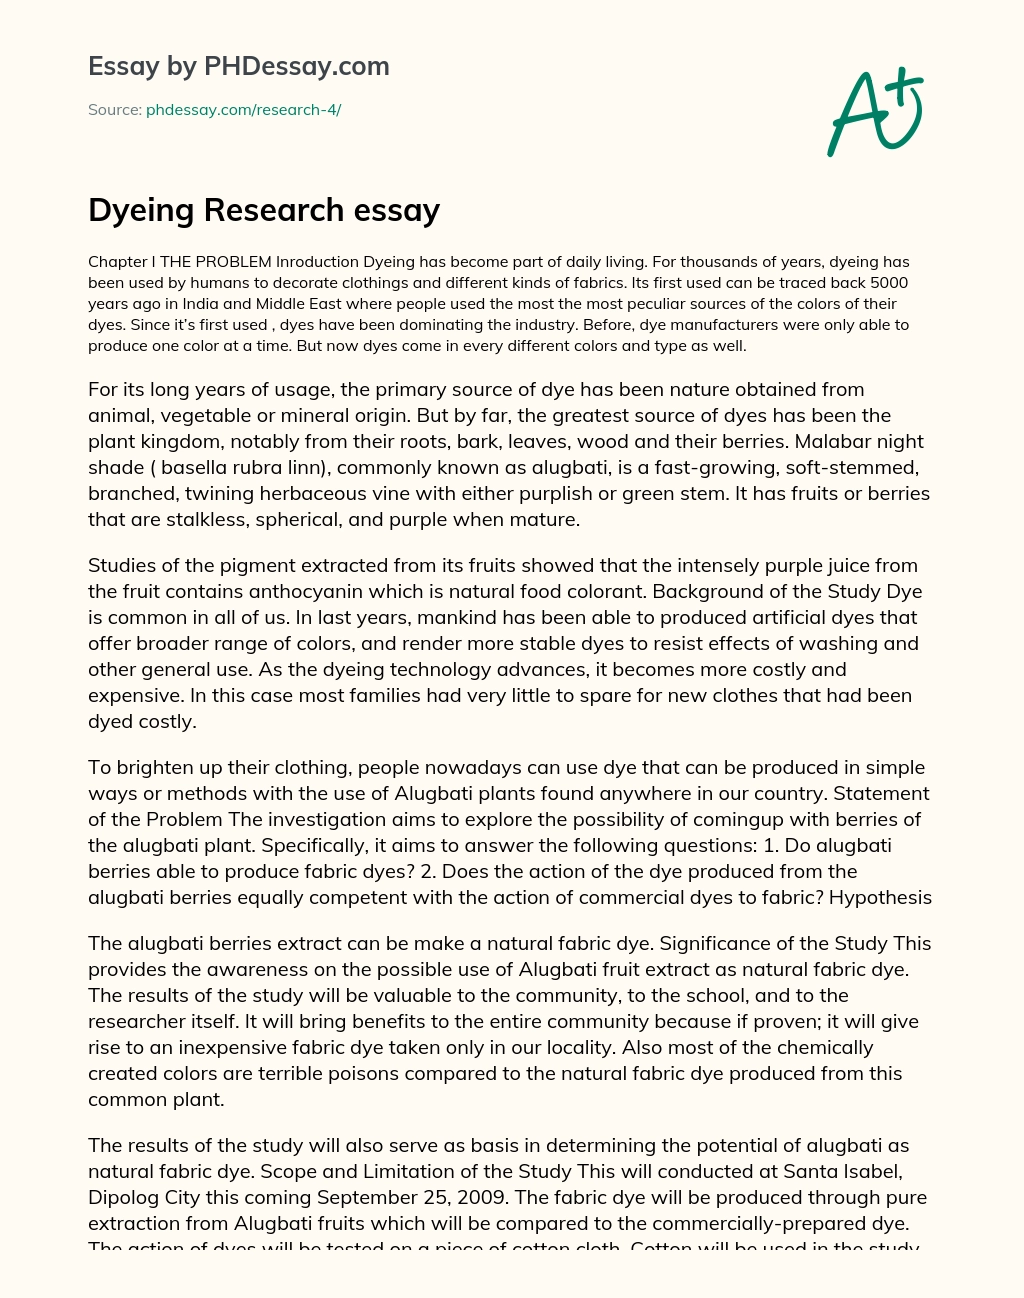 Dyeing Research essay essay